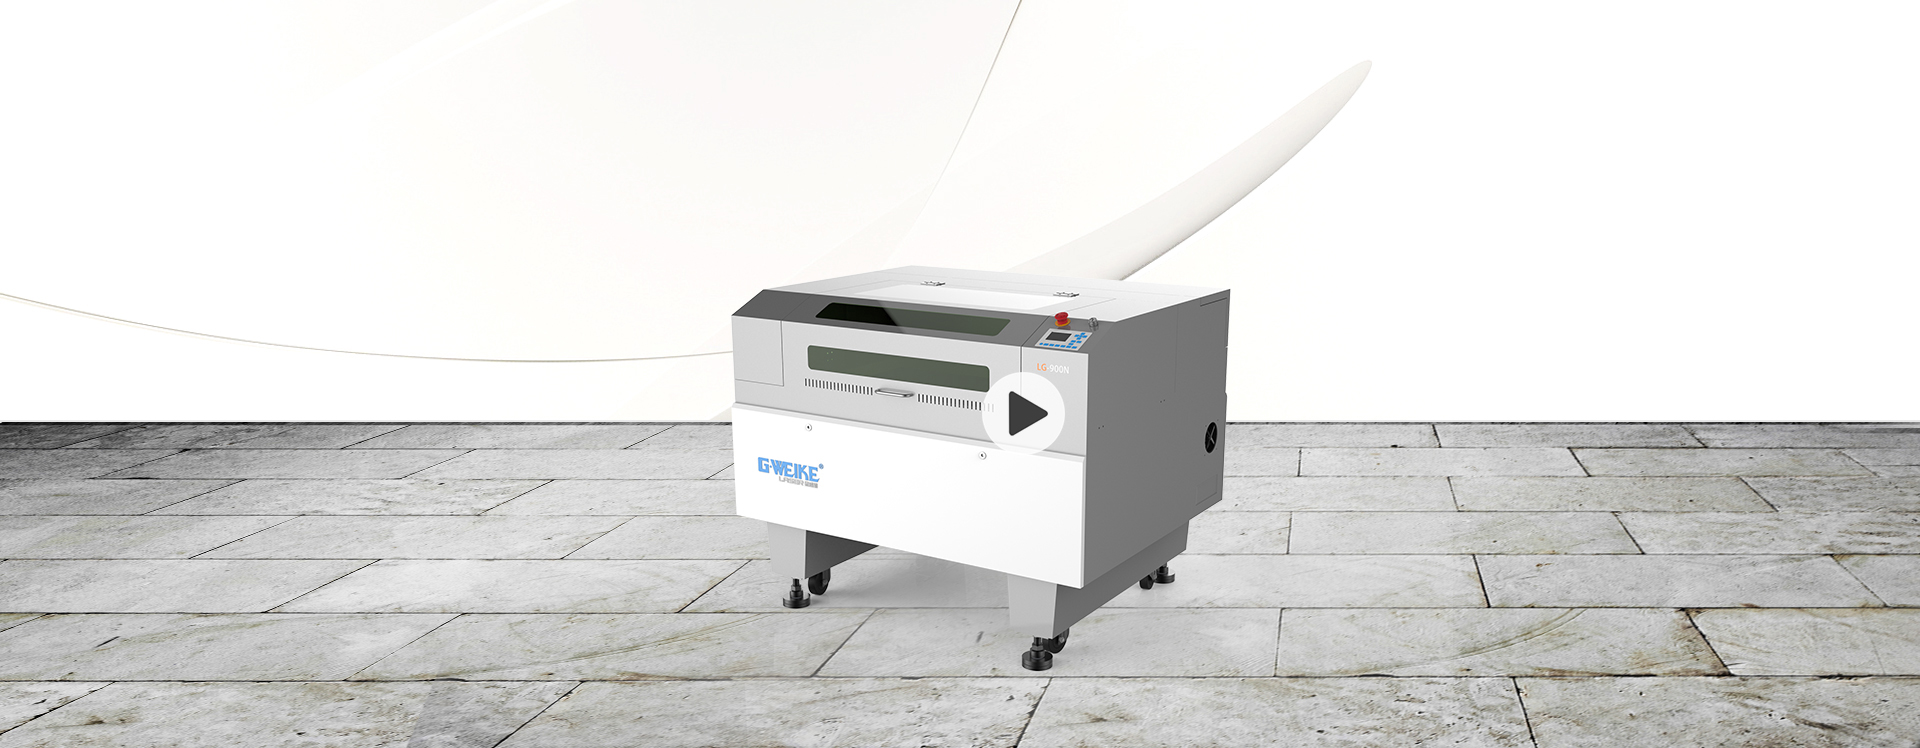 LG900N CO2 Laser Cutting Machine